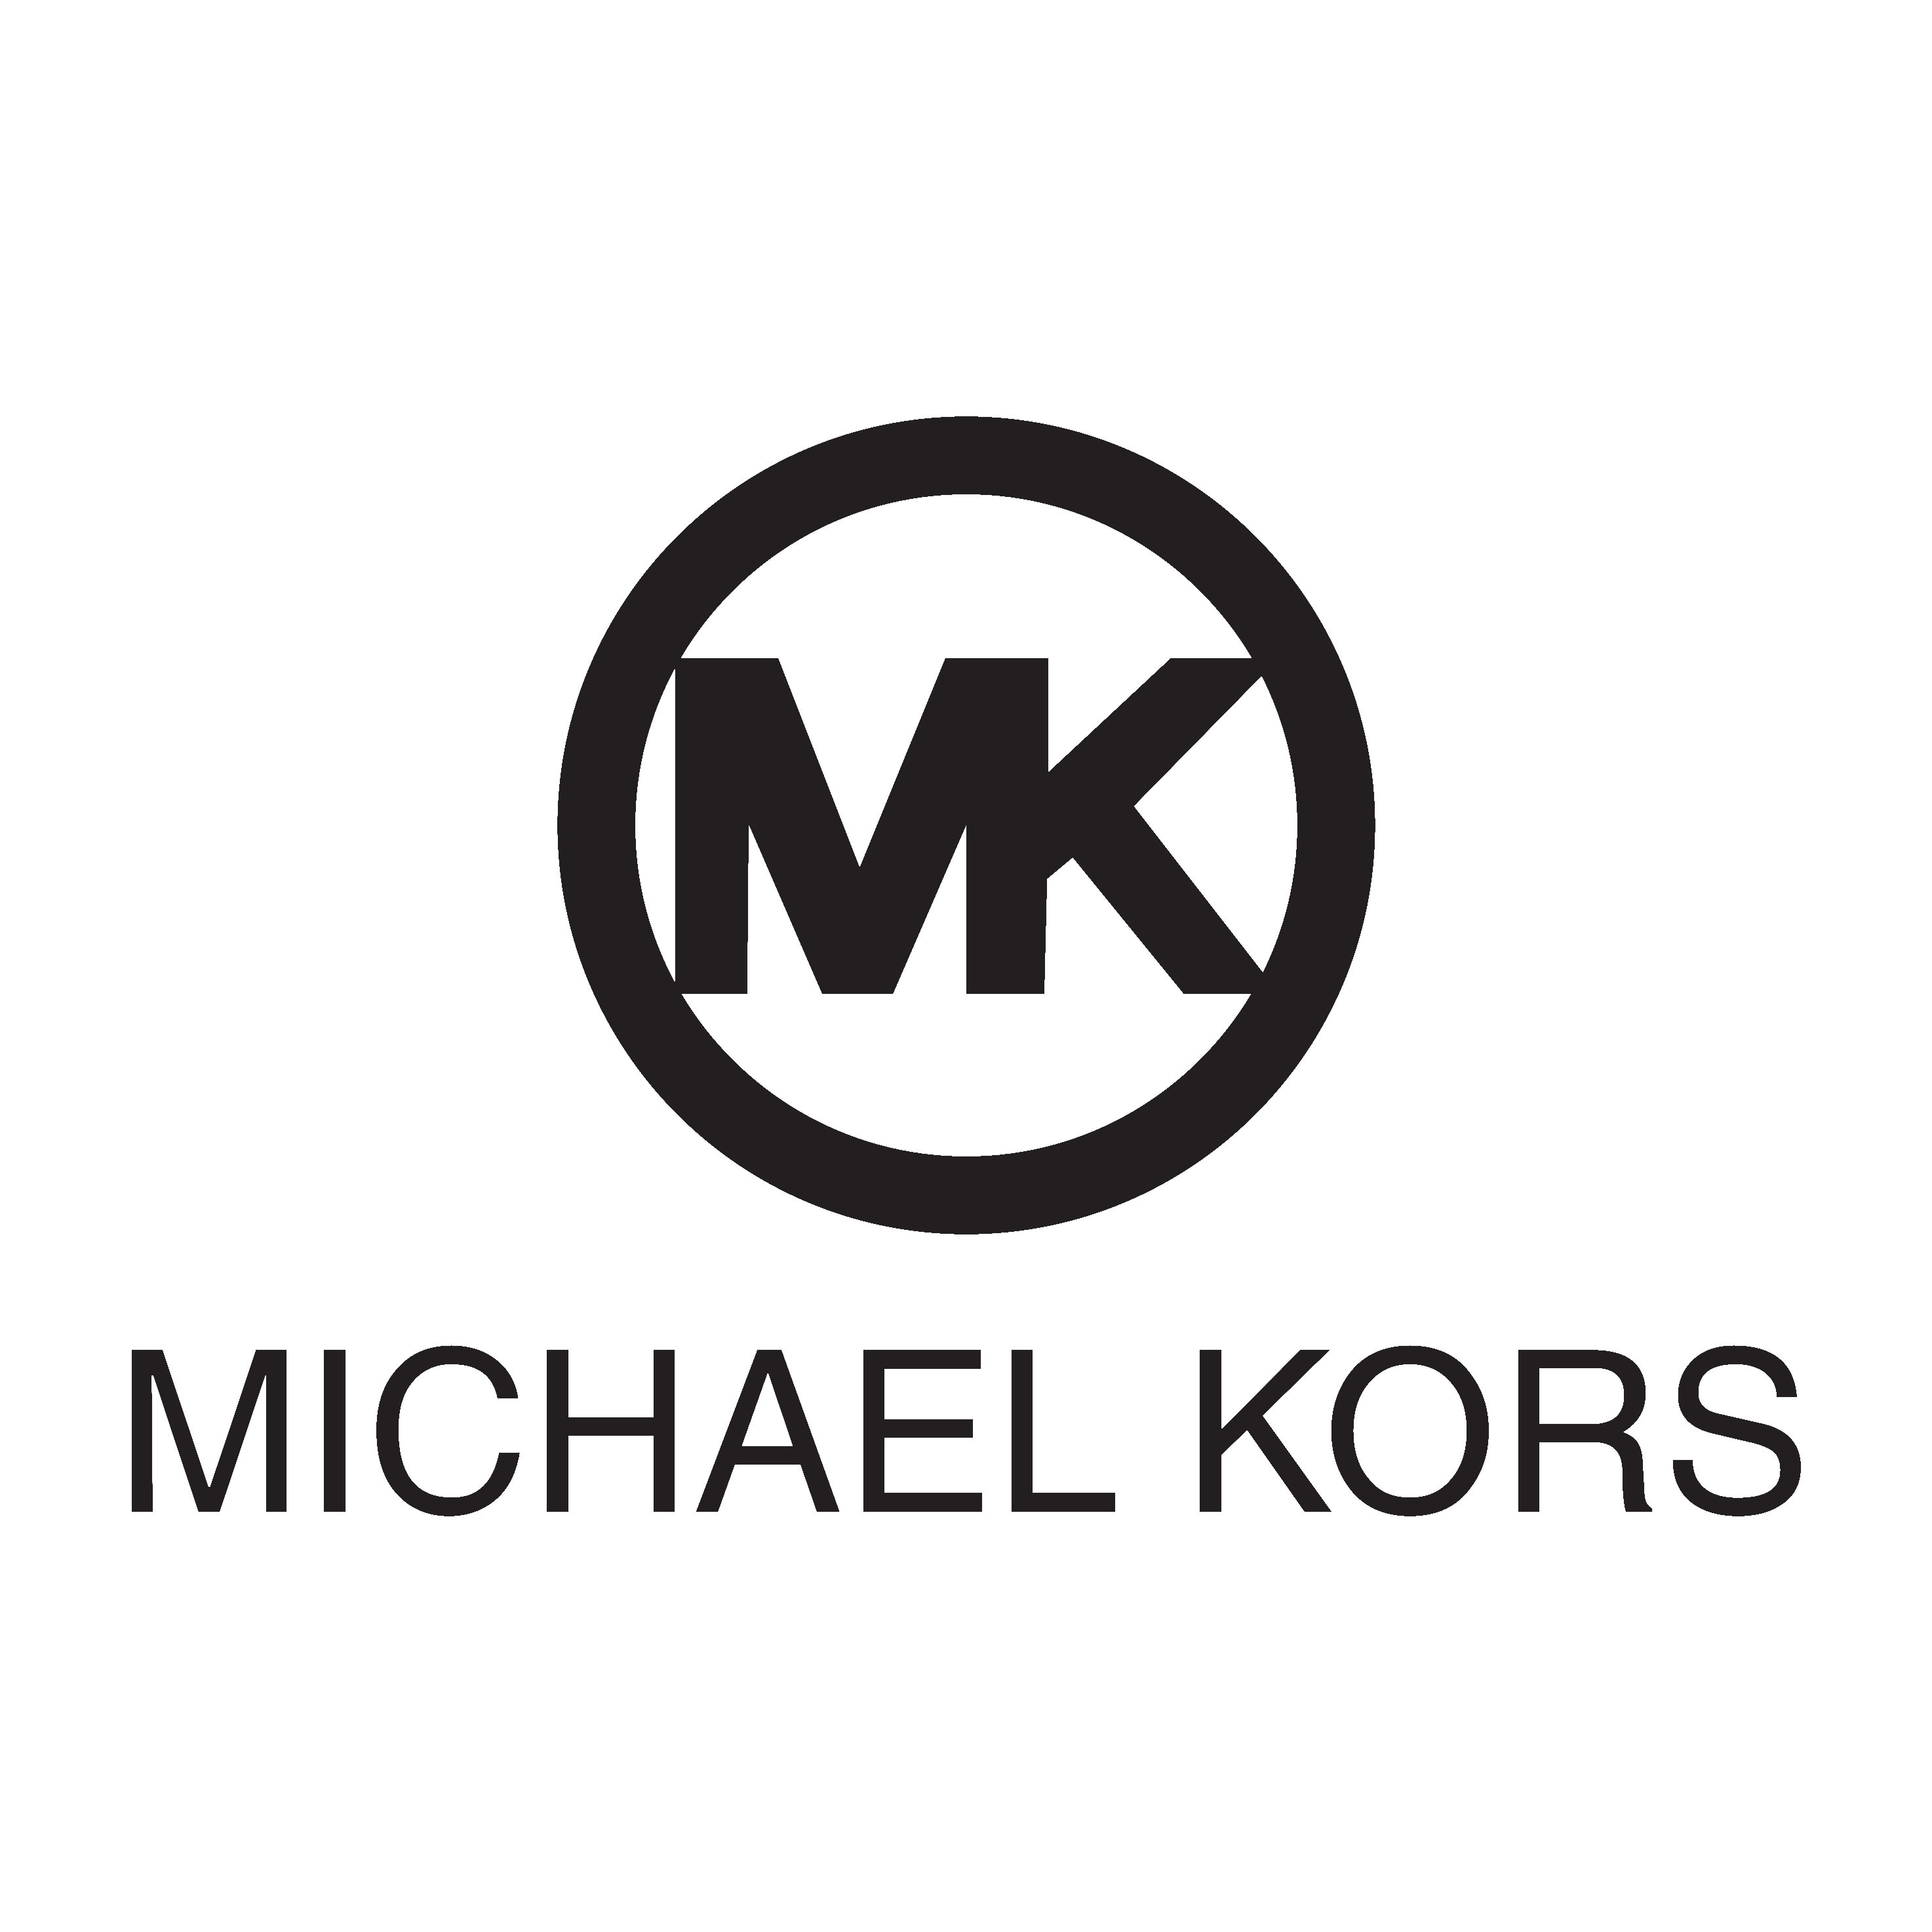 Michael Kors Black Friday Sale